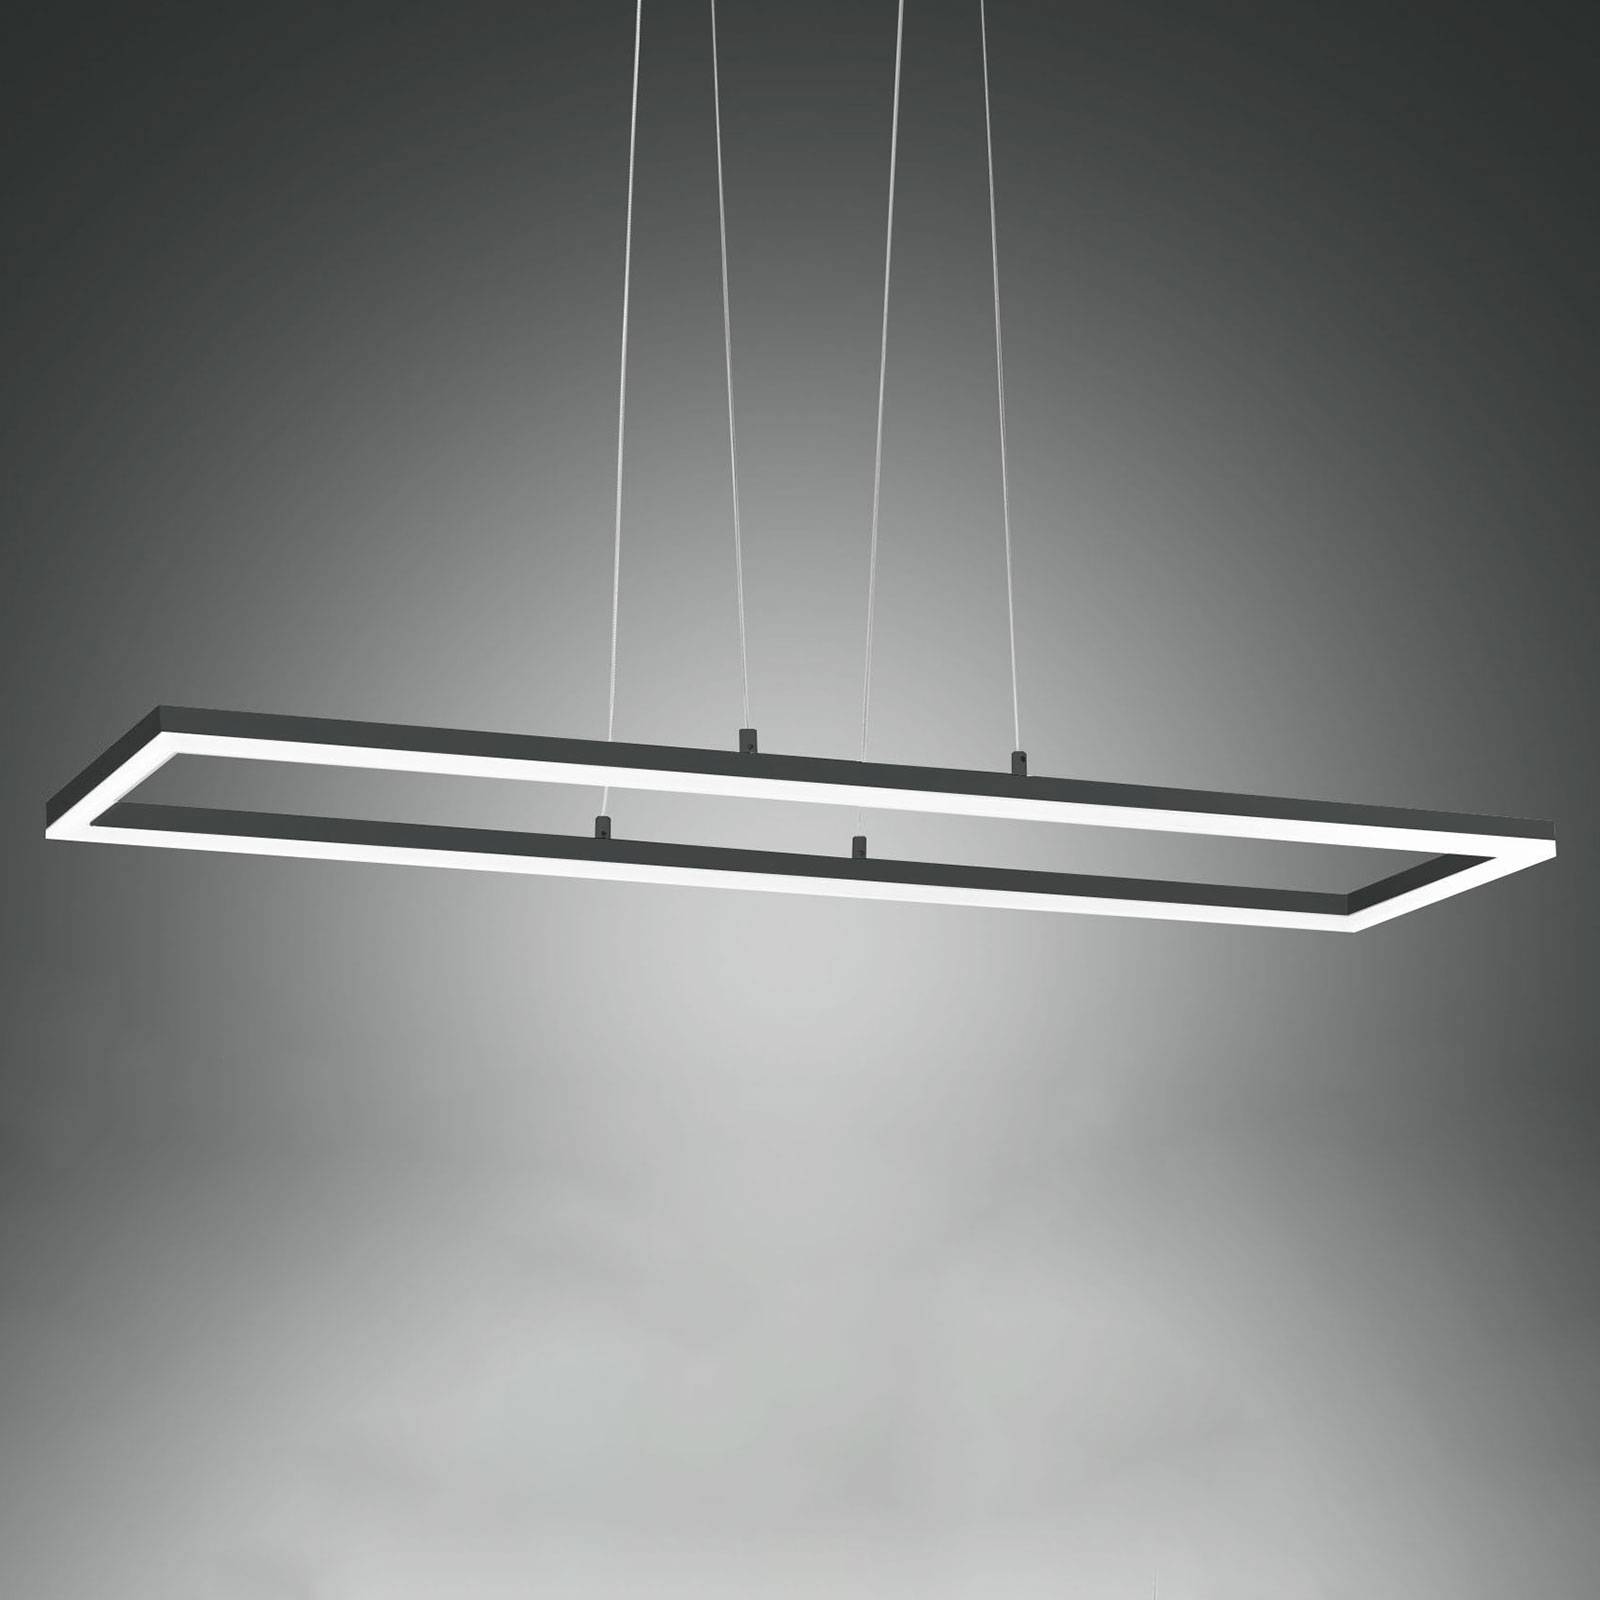 Lampa wisząca LED Bard, 92x32, antracytowa